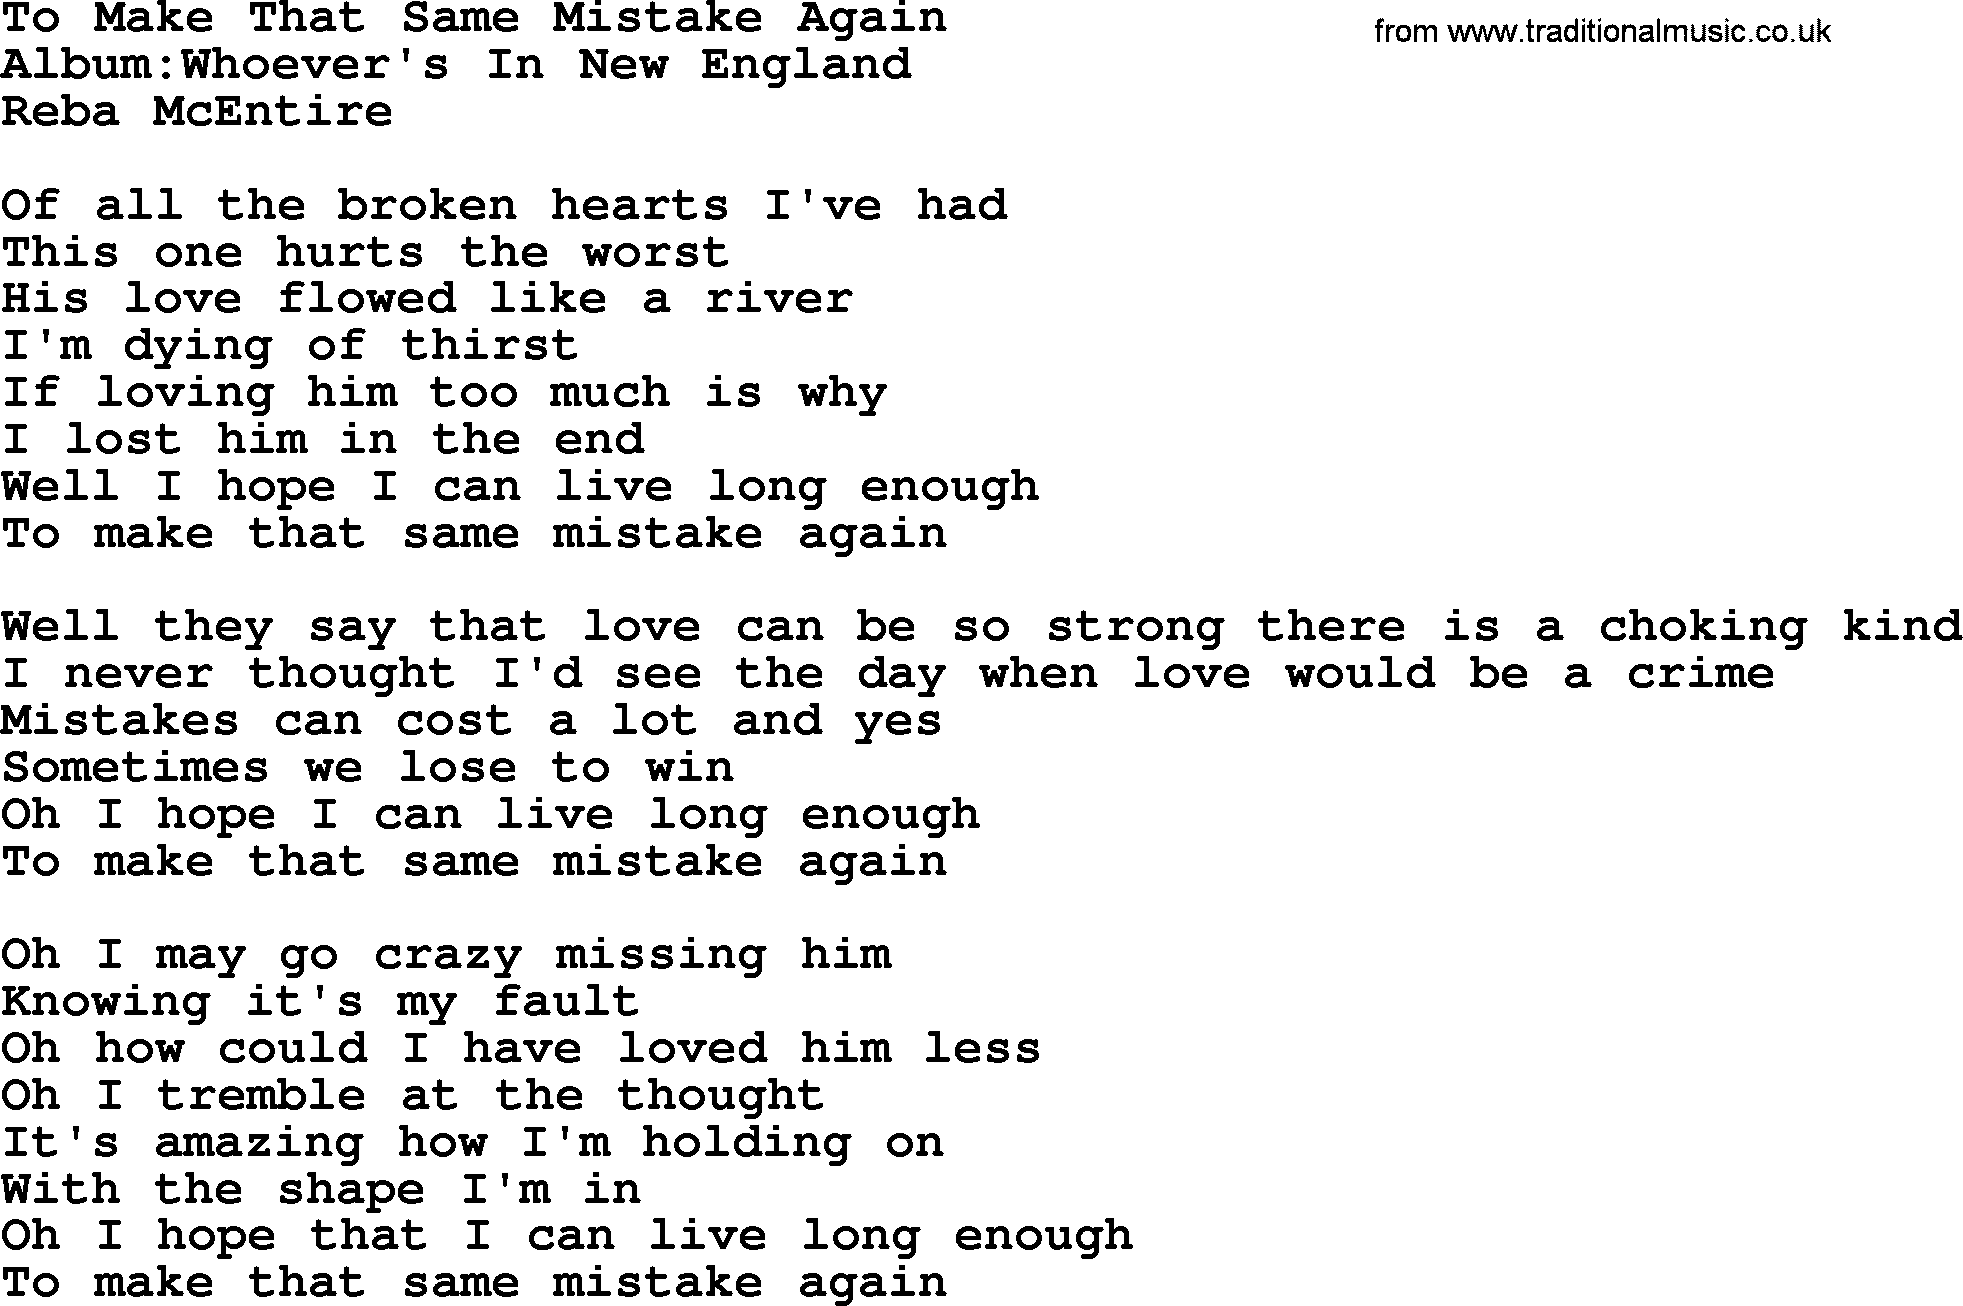 Reba McEntire song: To Make That Same Mistake Again lyrics